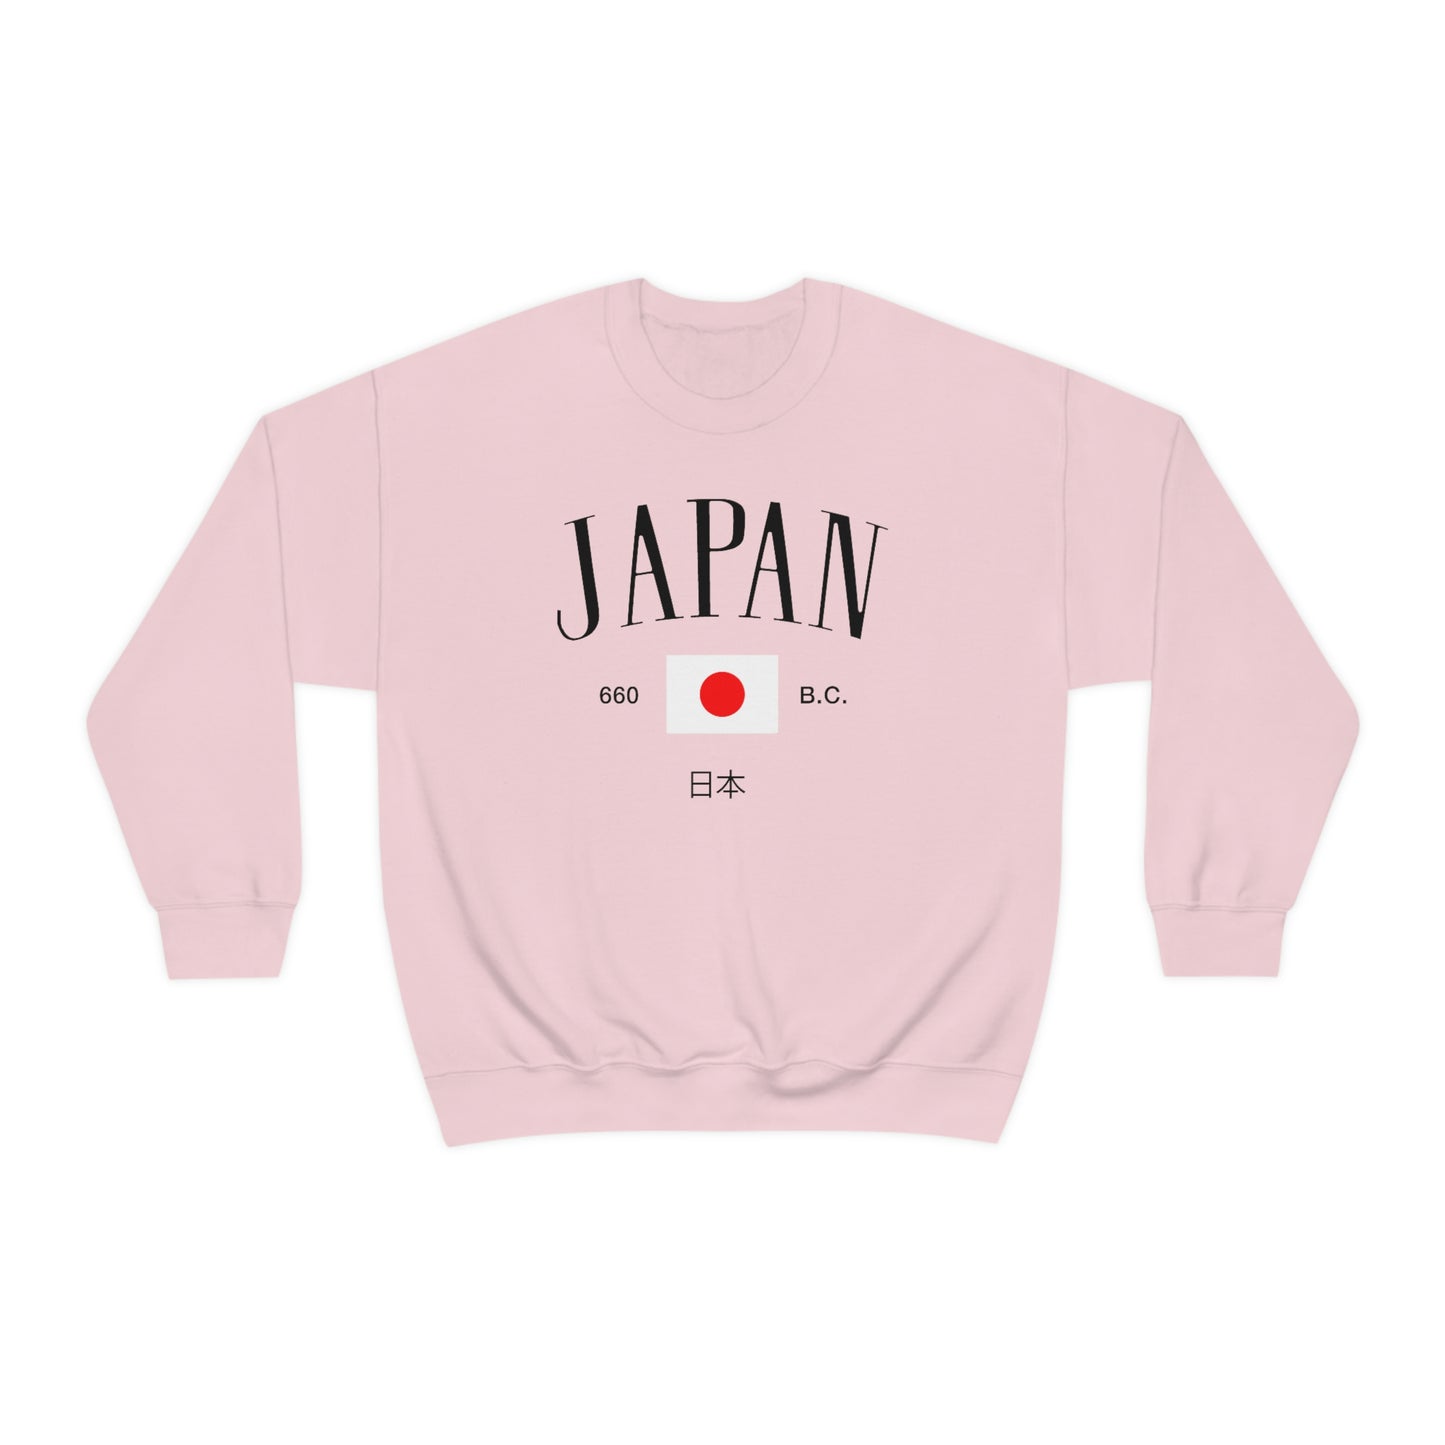 Japan Sweatshirt Tokyo Japanese Flag Soft Comfortable Crewneck Pullover Unisex 90s College style